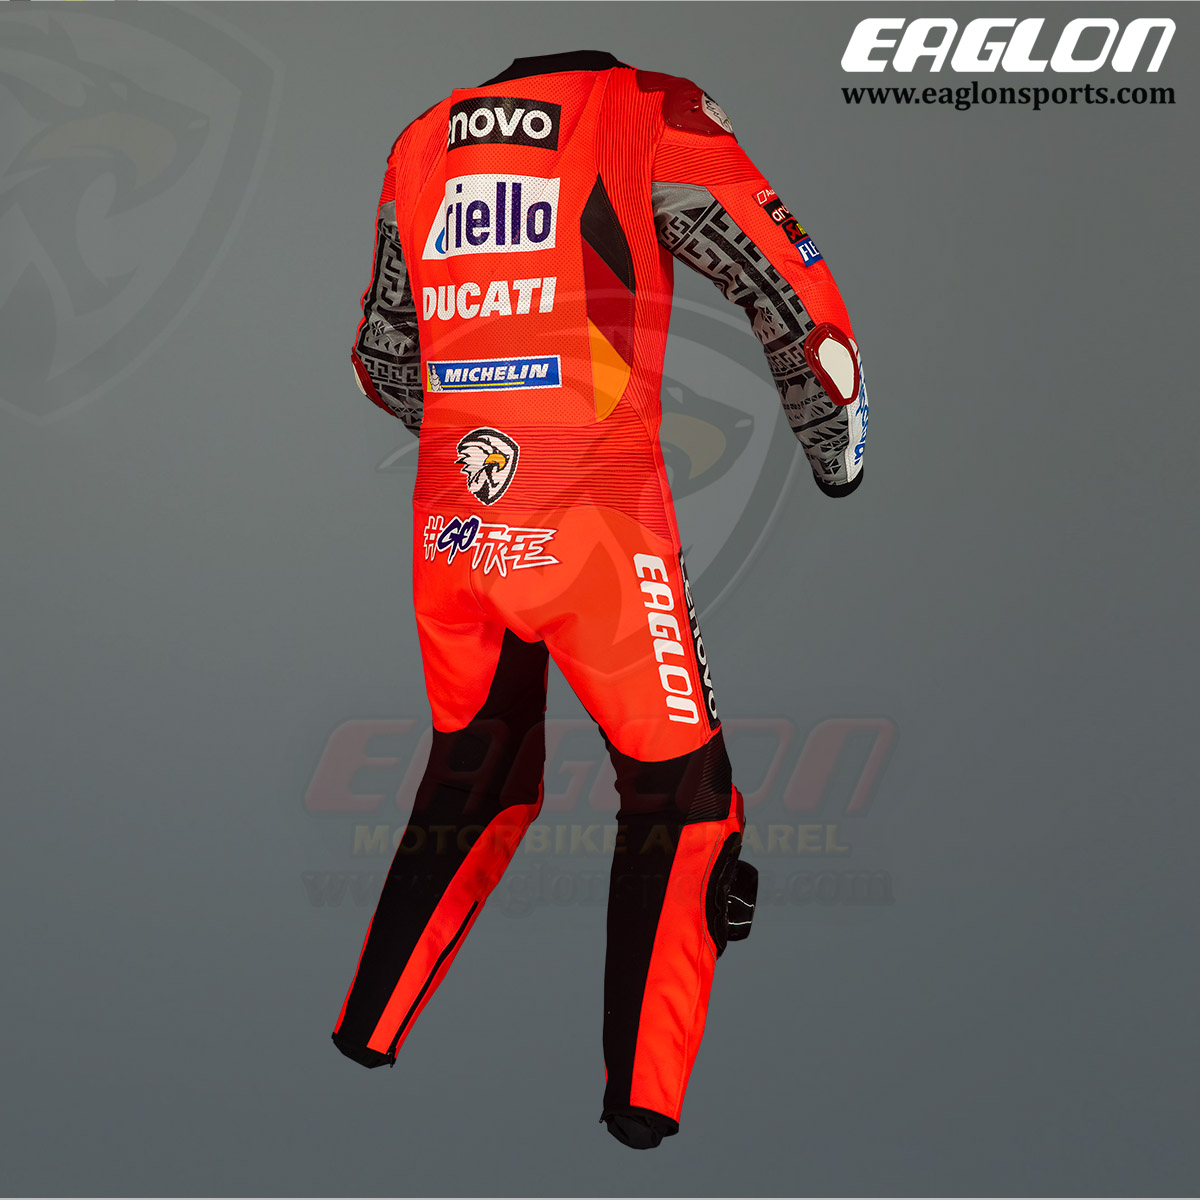 Francesco-Bagnaia-Ducati-MotoGP-2021-Leather-Riding-Suit